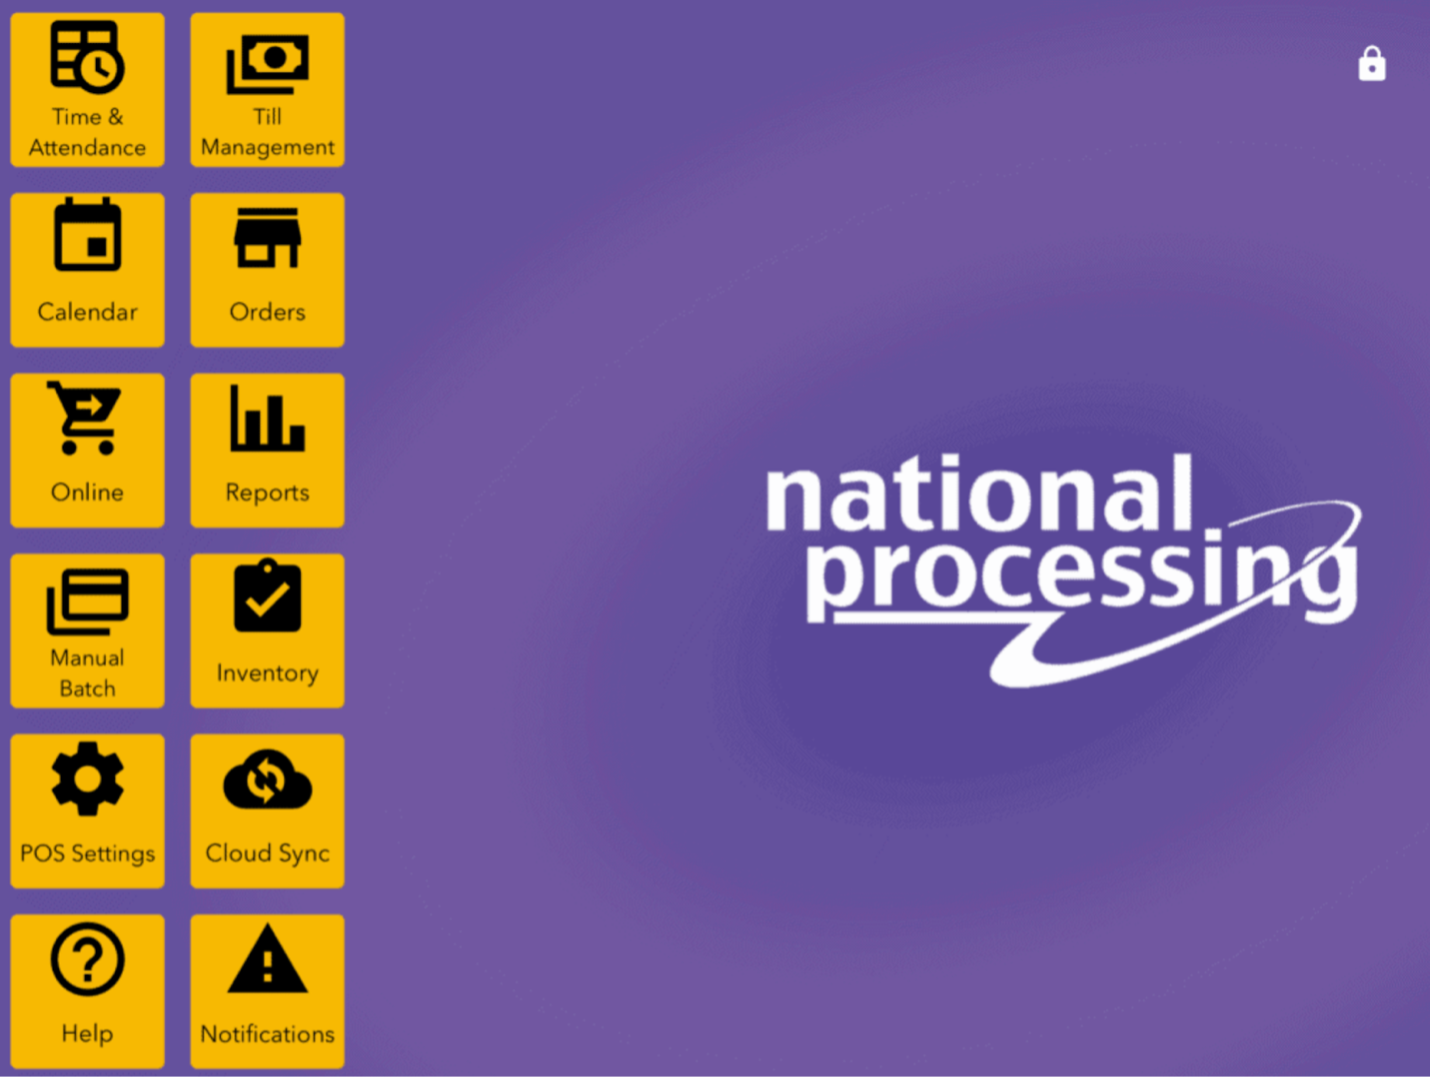 National Processing menu system